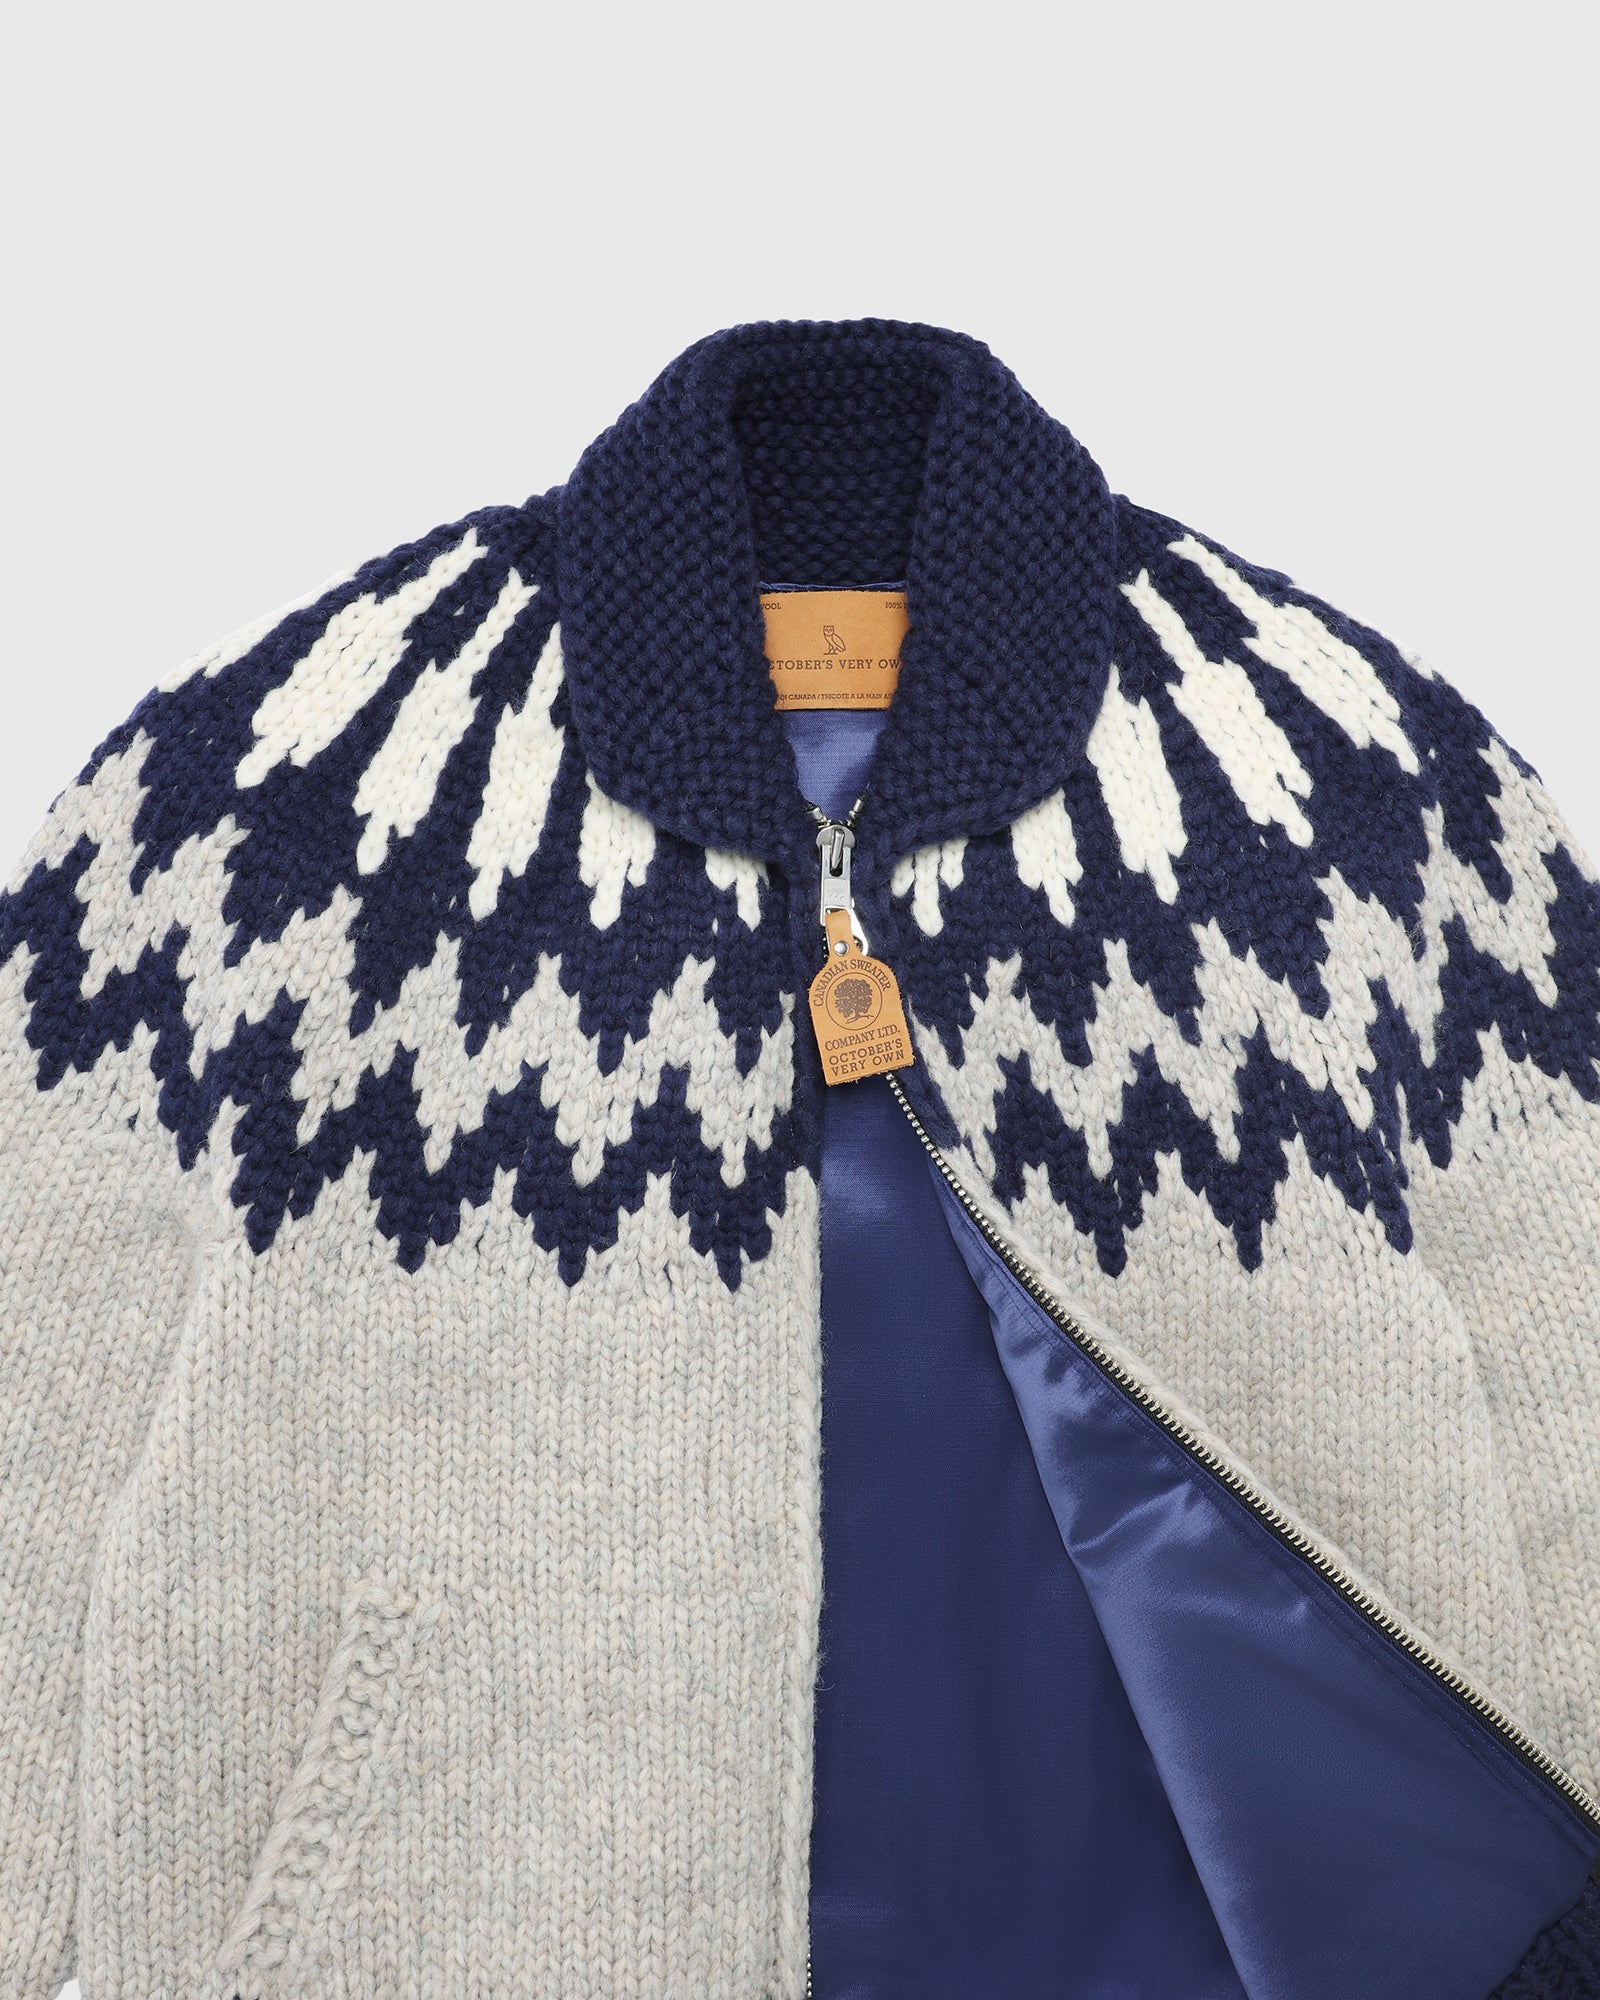 Canadian Sweater Company Hand Knit Cardigan - Oatmeal